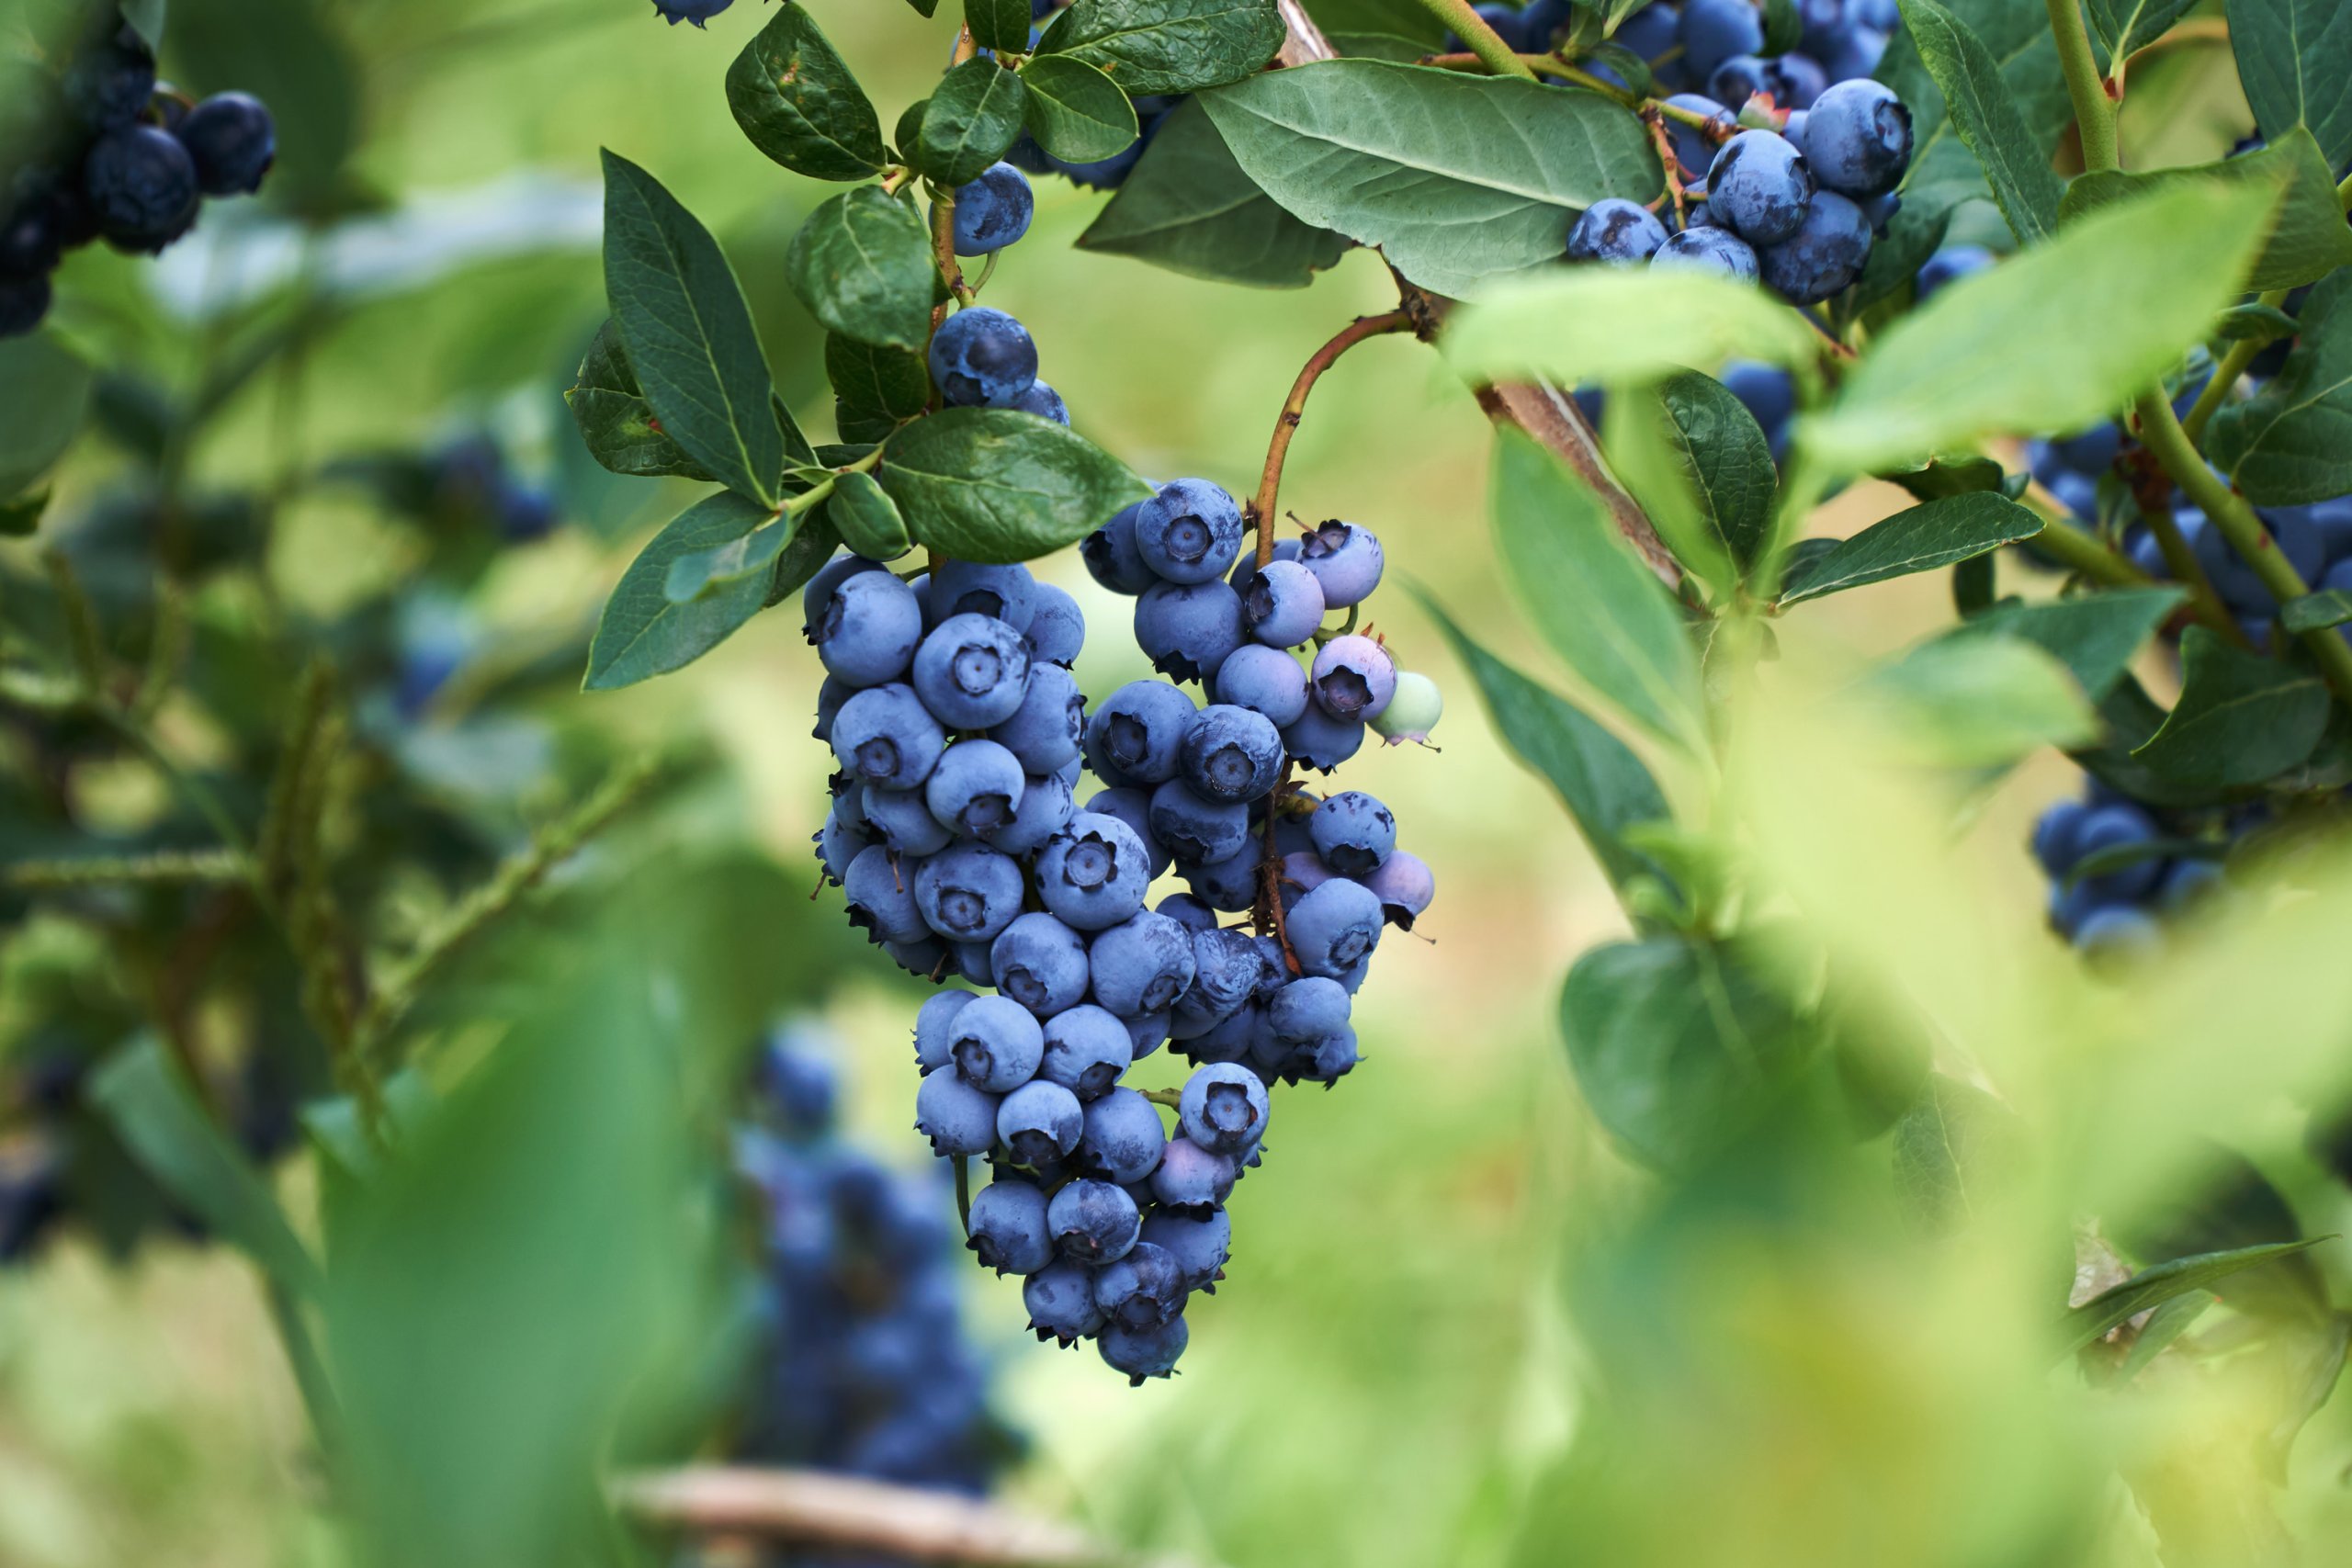 Blueberries growing on a tree in a field.